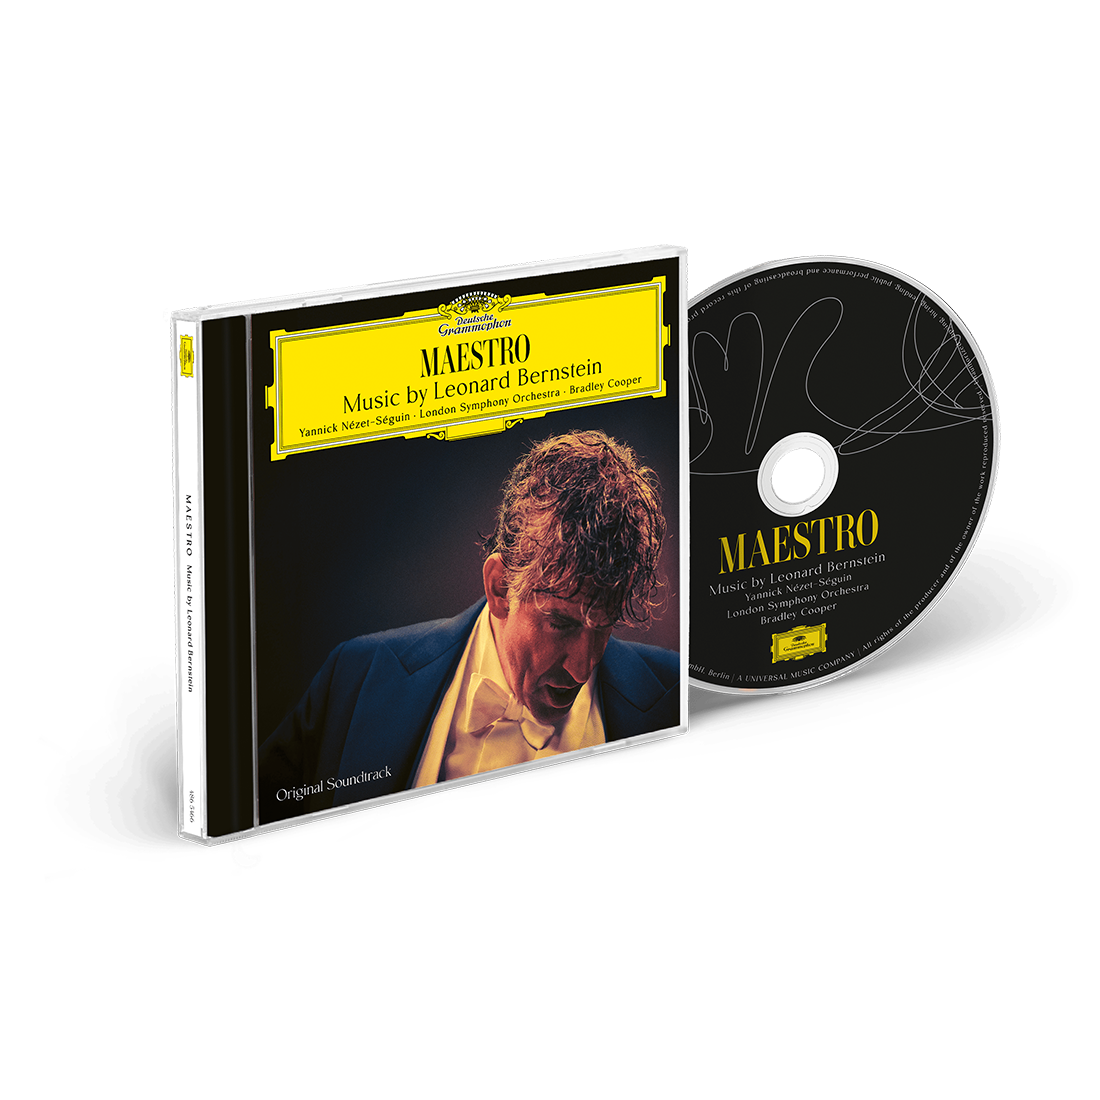 London Symphony Orchestra, Yannick-Nézet-Ségui - Maestro: Music by Leonard Bernstein: CD